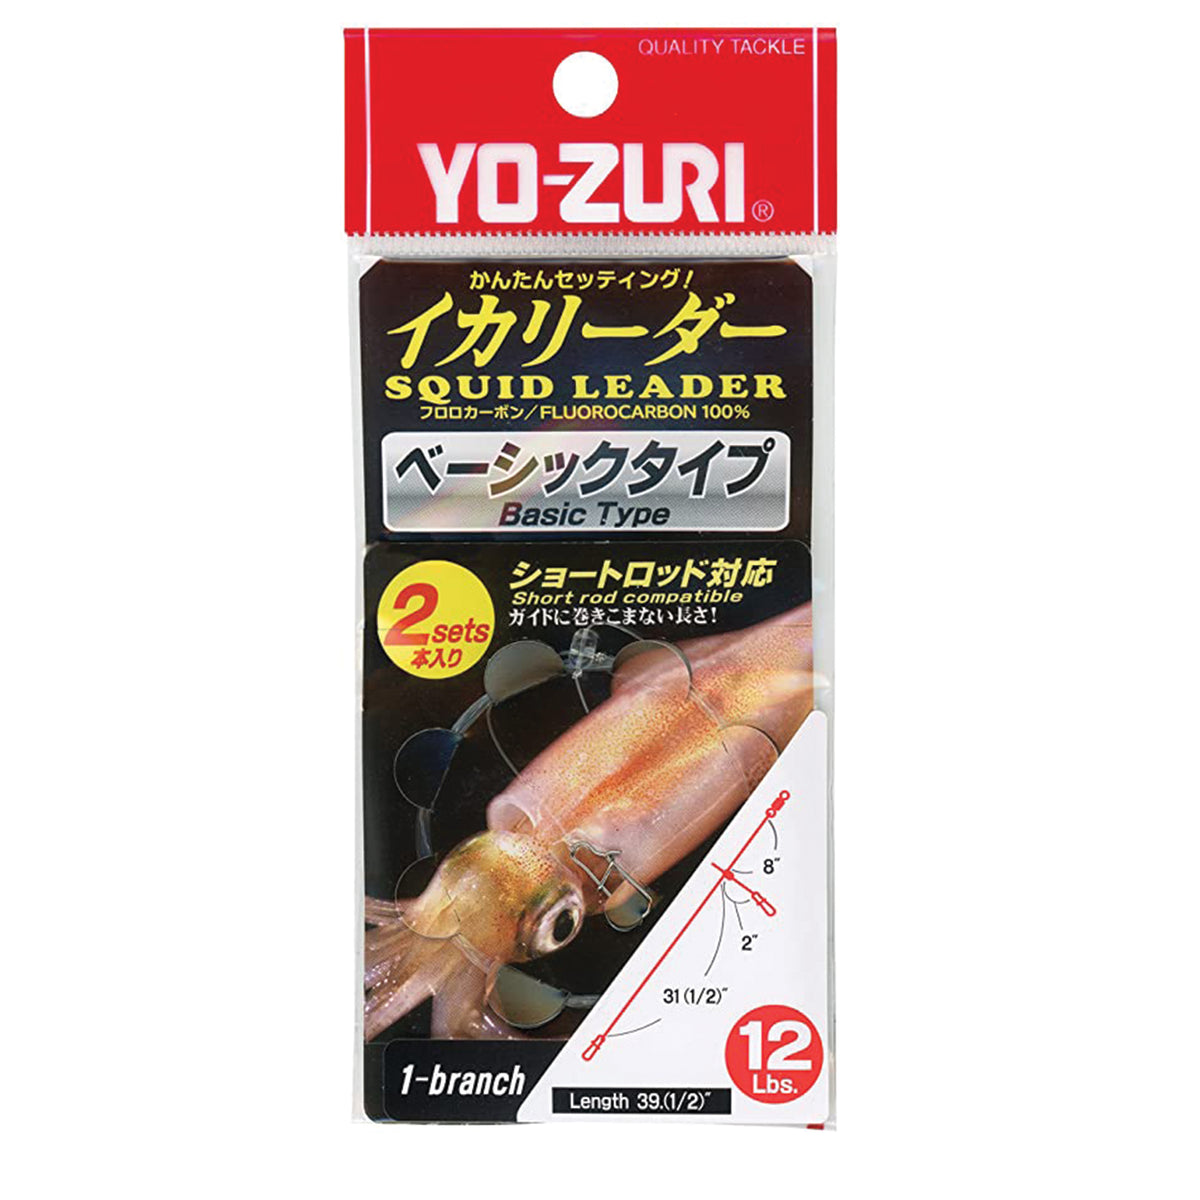 Yozuri Squid Leader R1344